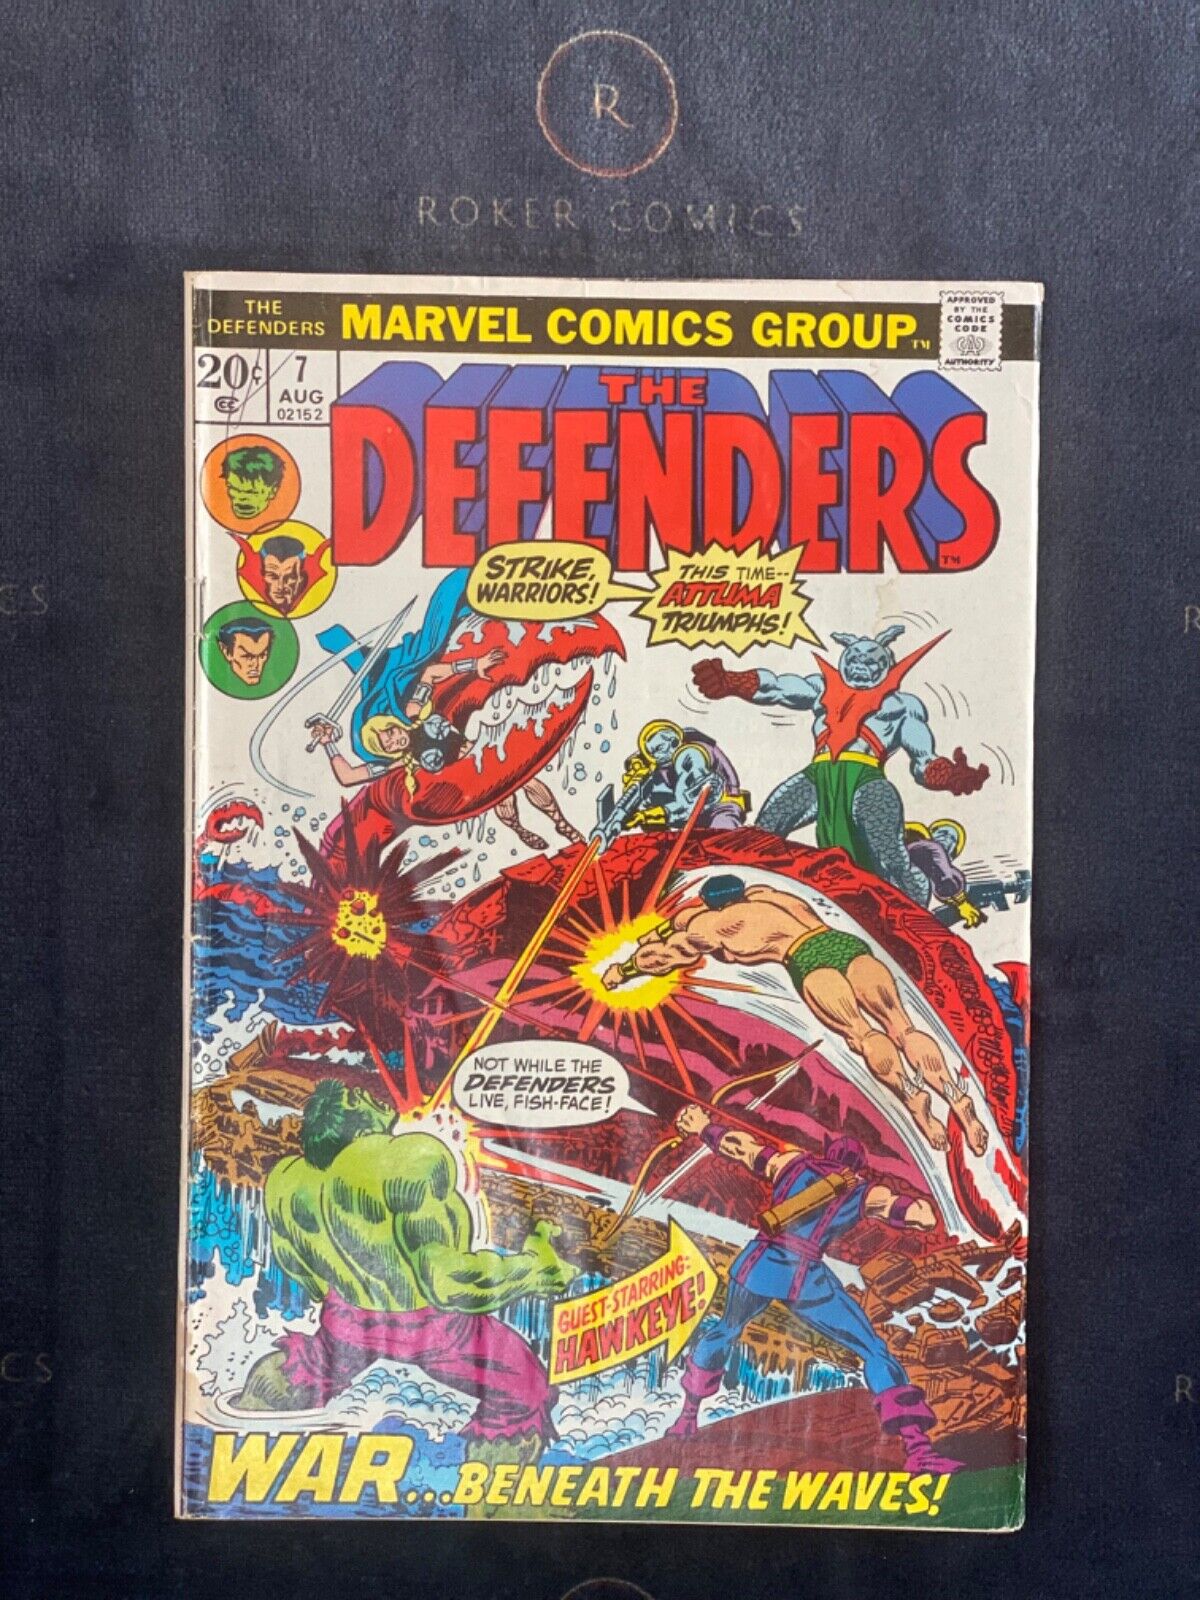 RARE 1973 Defenders #7